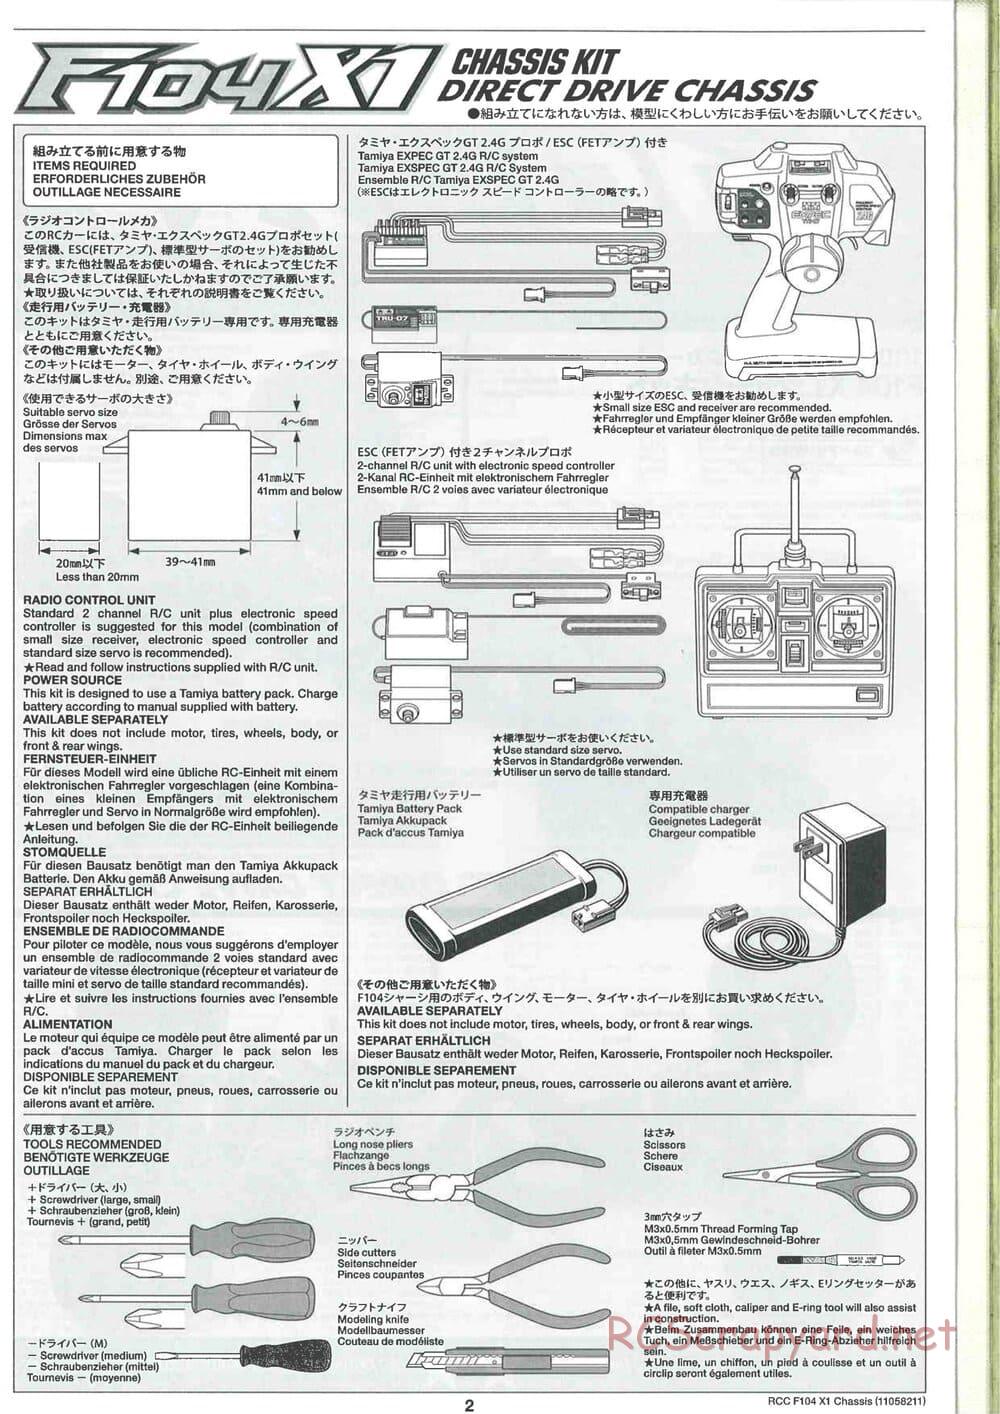 Tamiya - F104X1 Chassis - Manual - Page 2